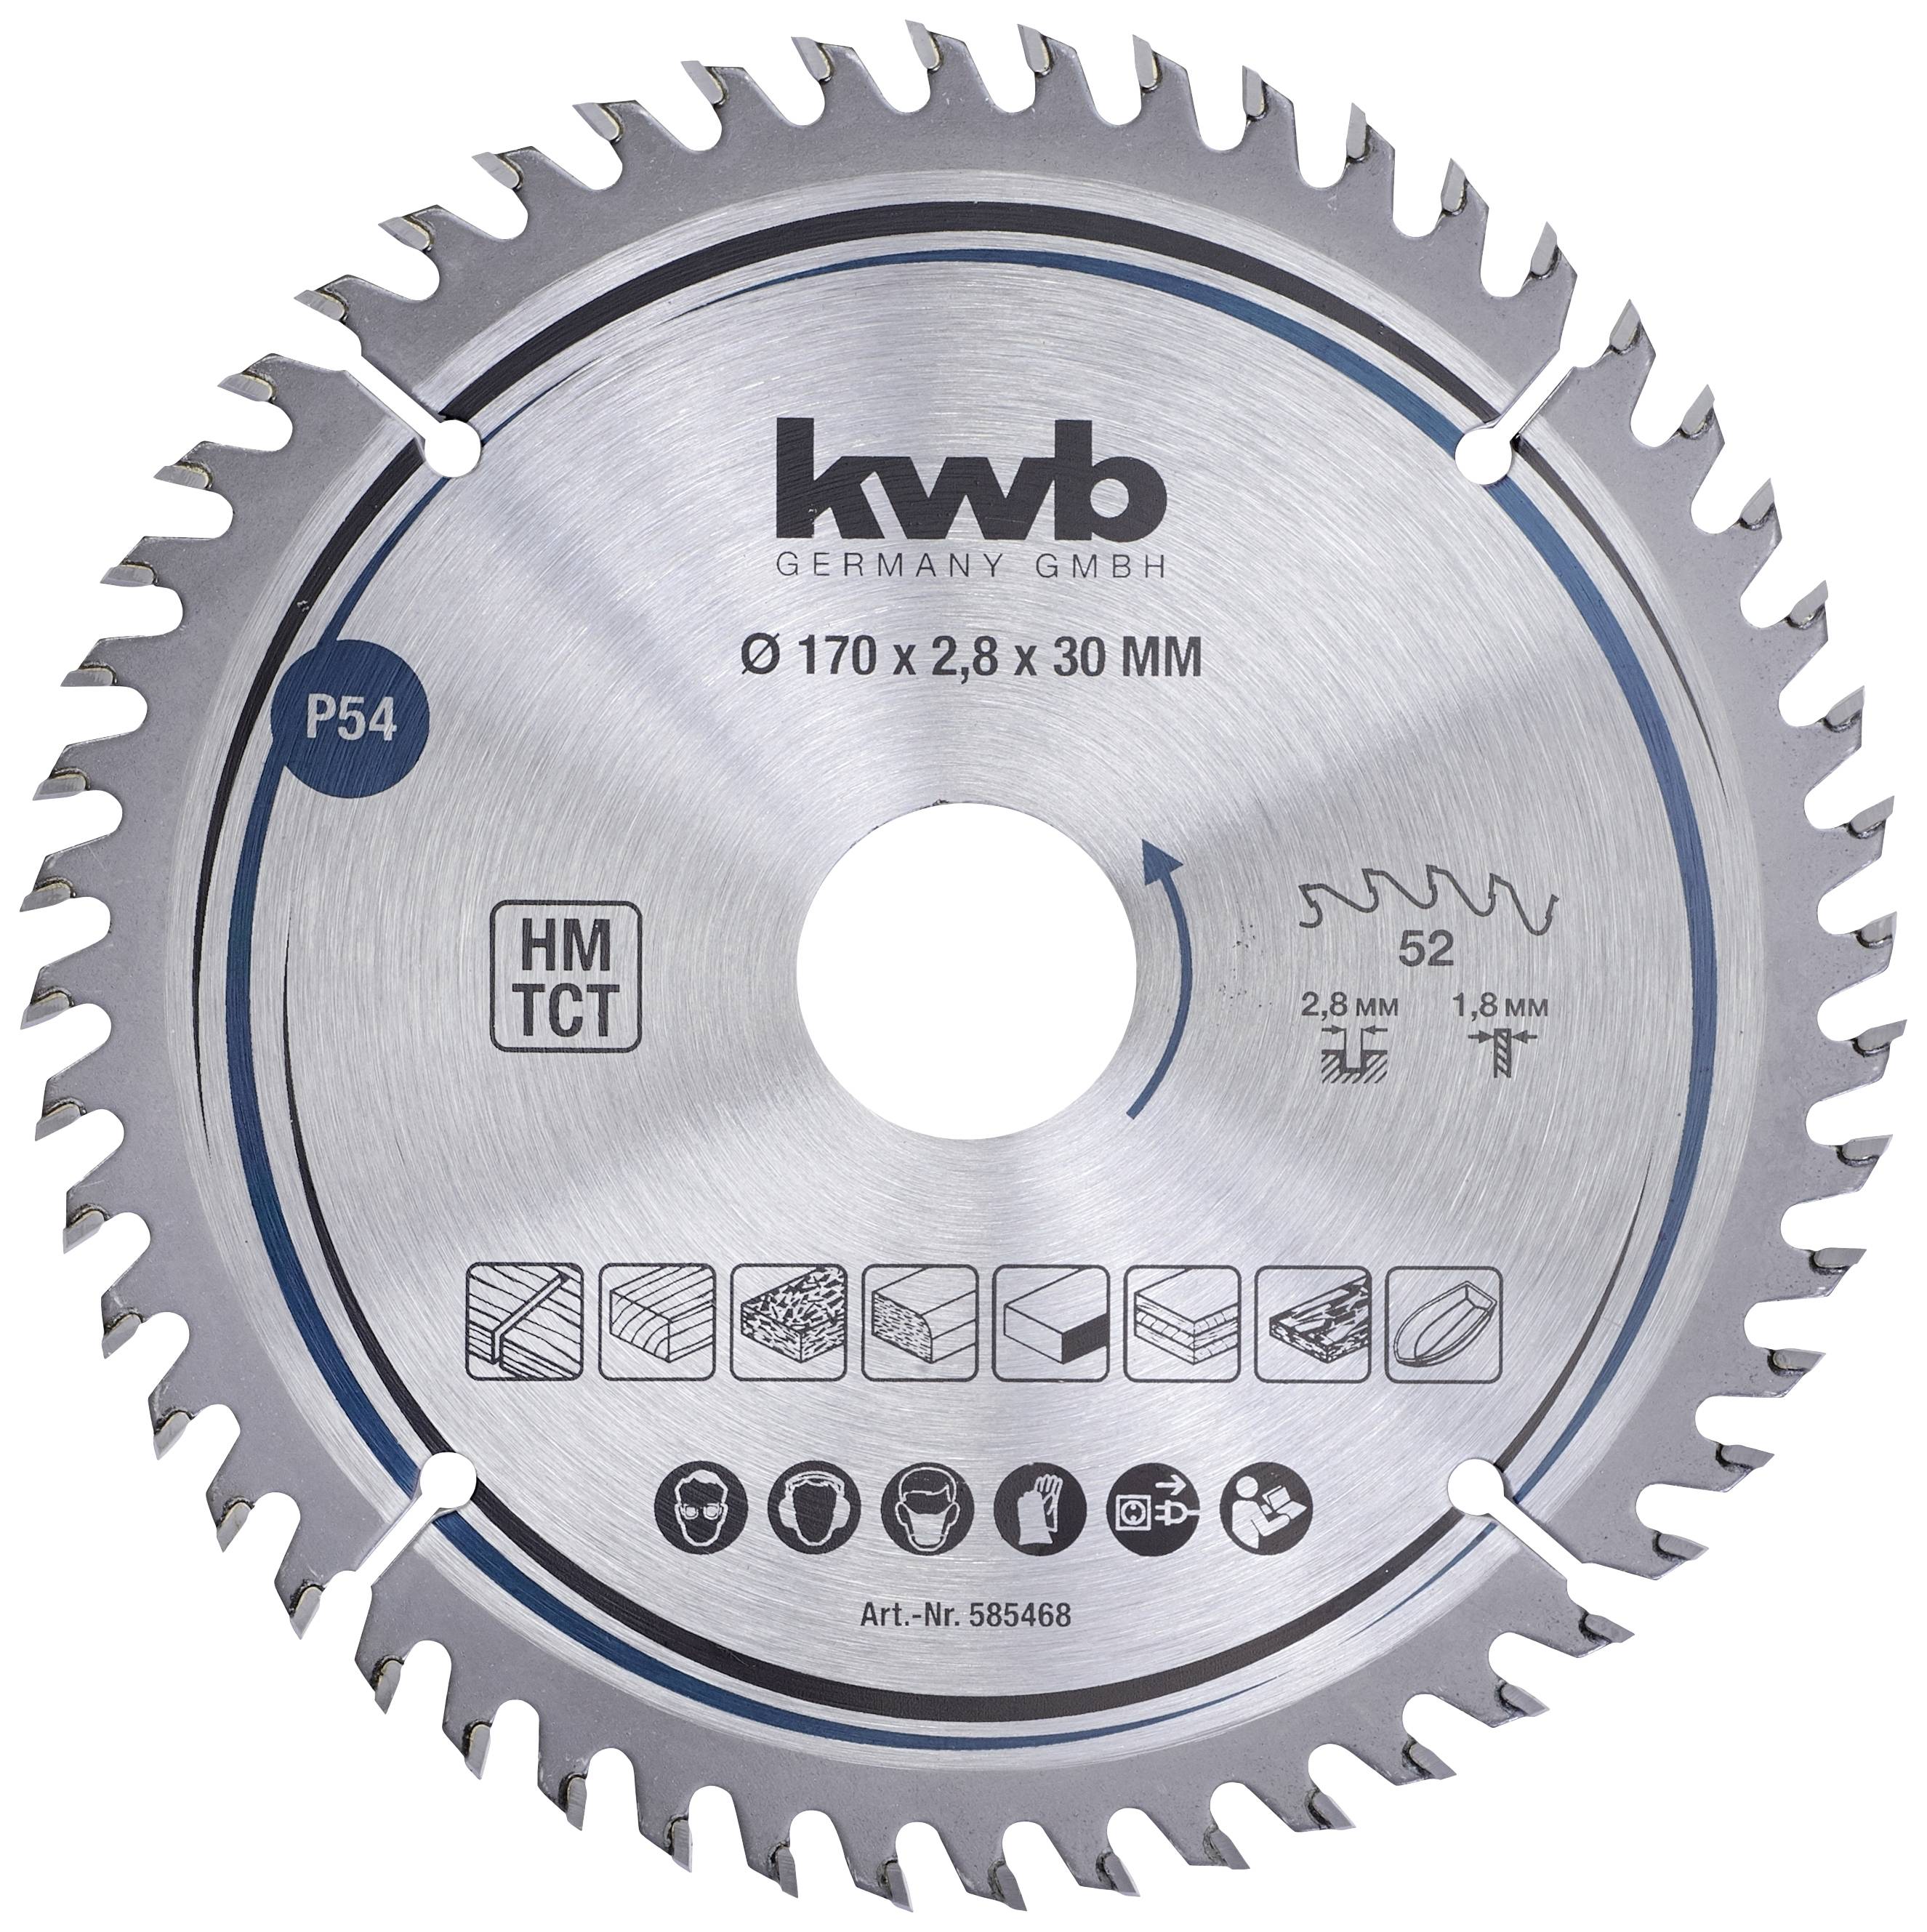 kwb Electronic saw pc(s) Buy 30 170 1 blade Conrad Circular 585468 | mm x